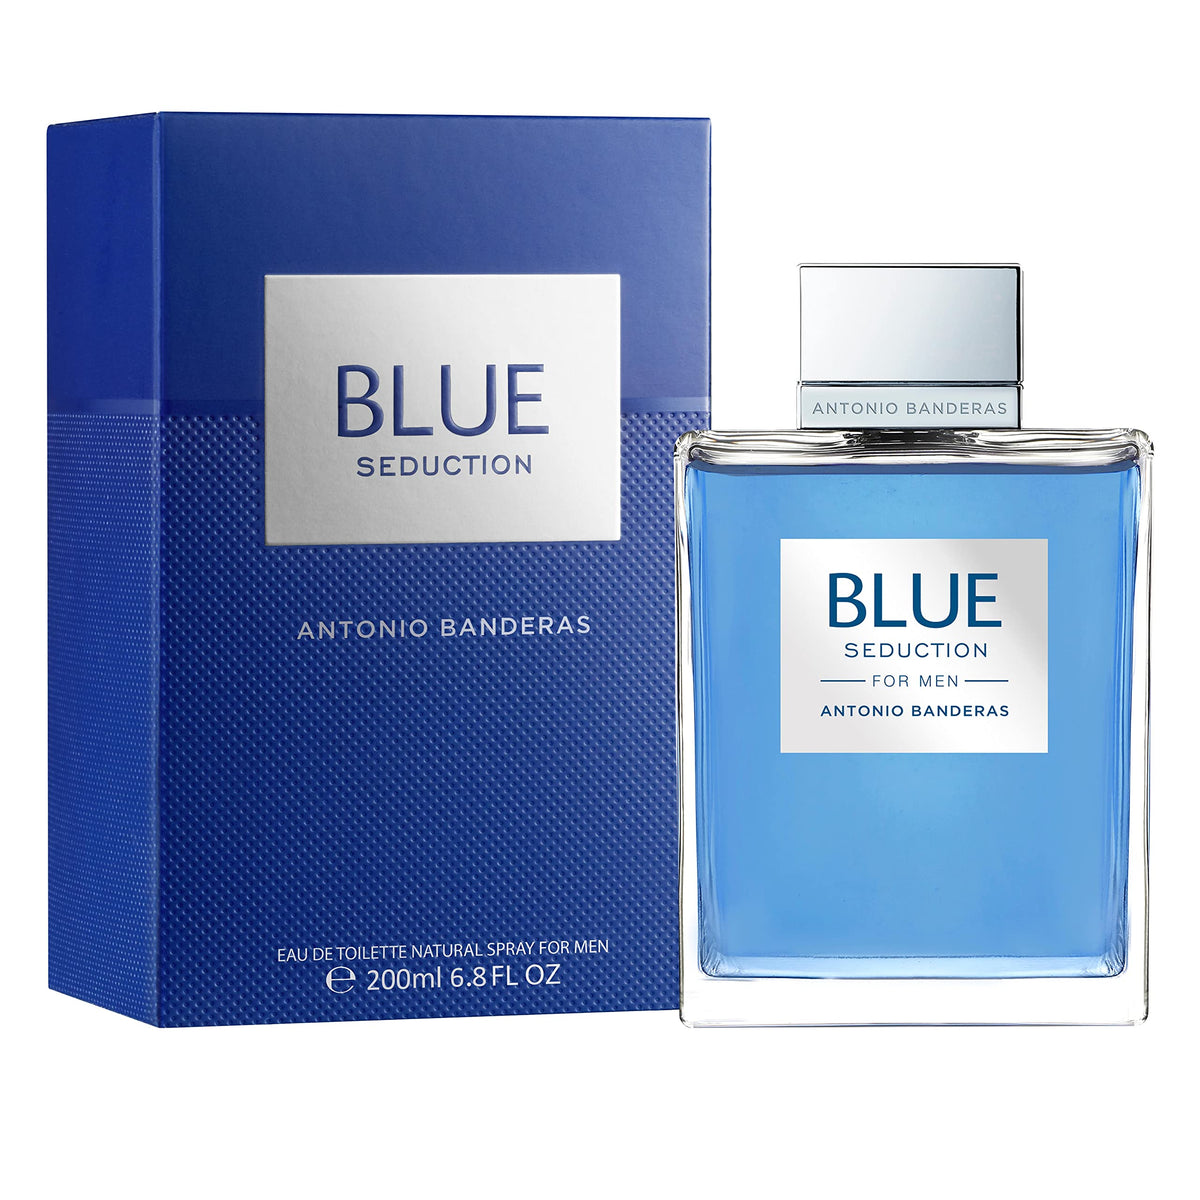 Antonio Banderas Blue Seduction 200ml Eau De Toilette Spray